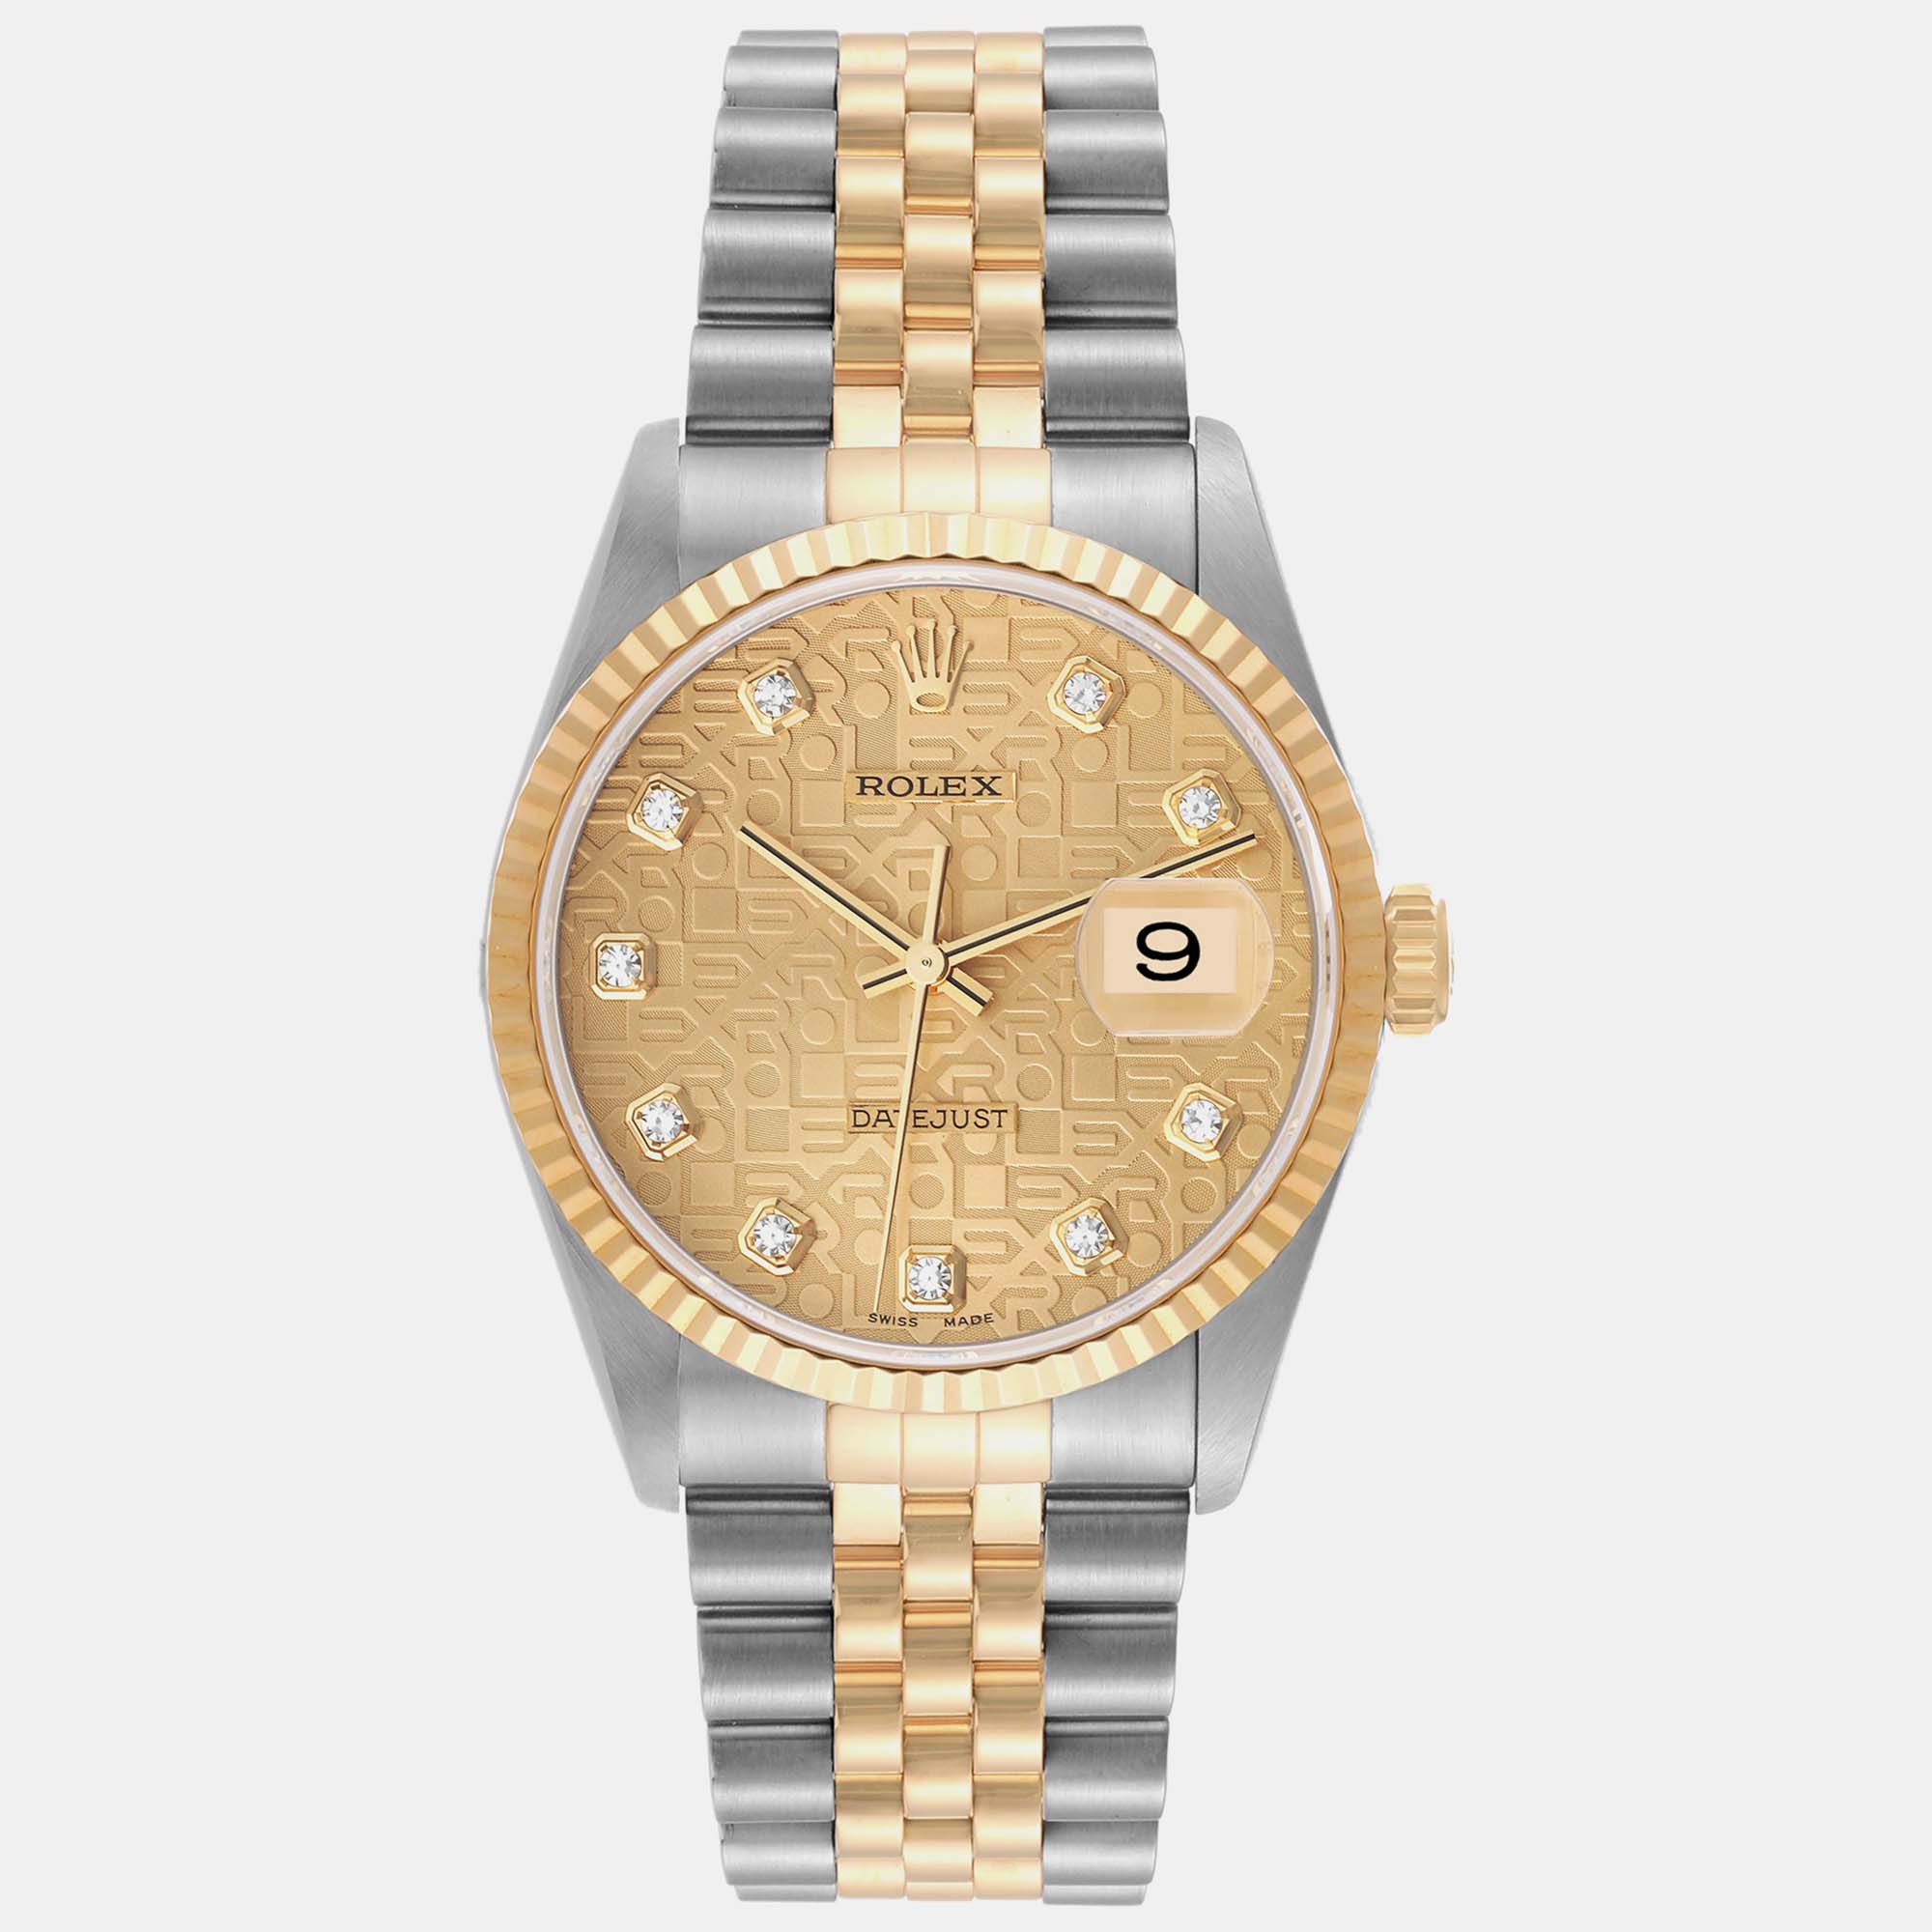 Rolex datejust steel yellow gold diamond anniversary dial men's watch 16233 36 mm